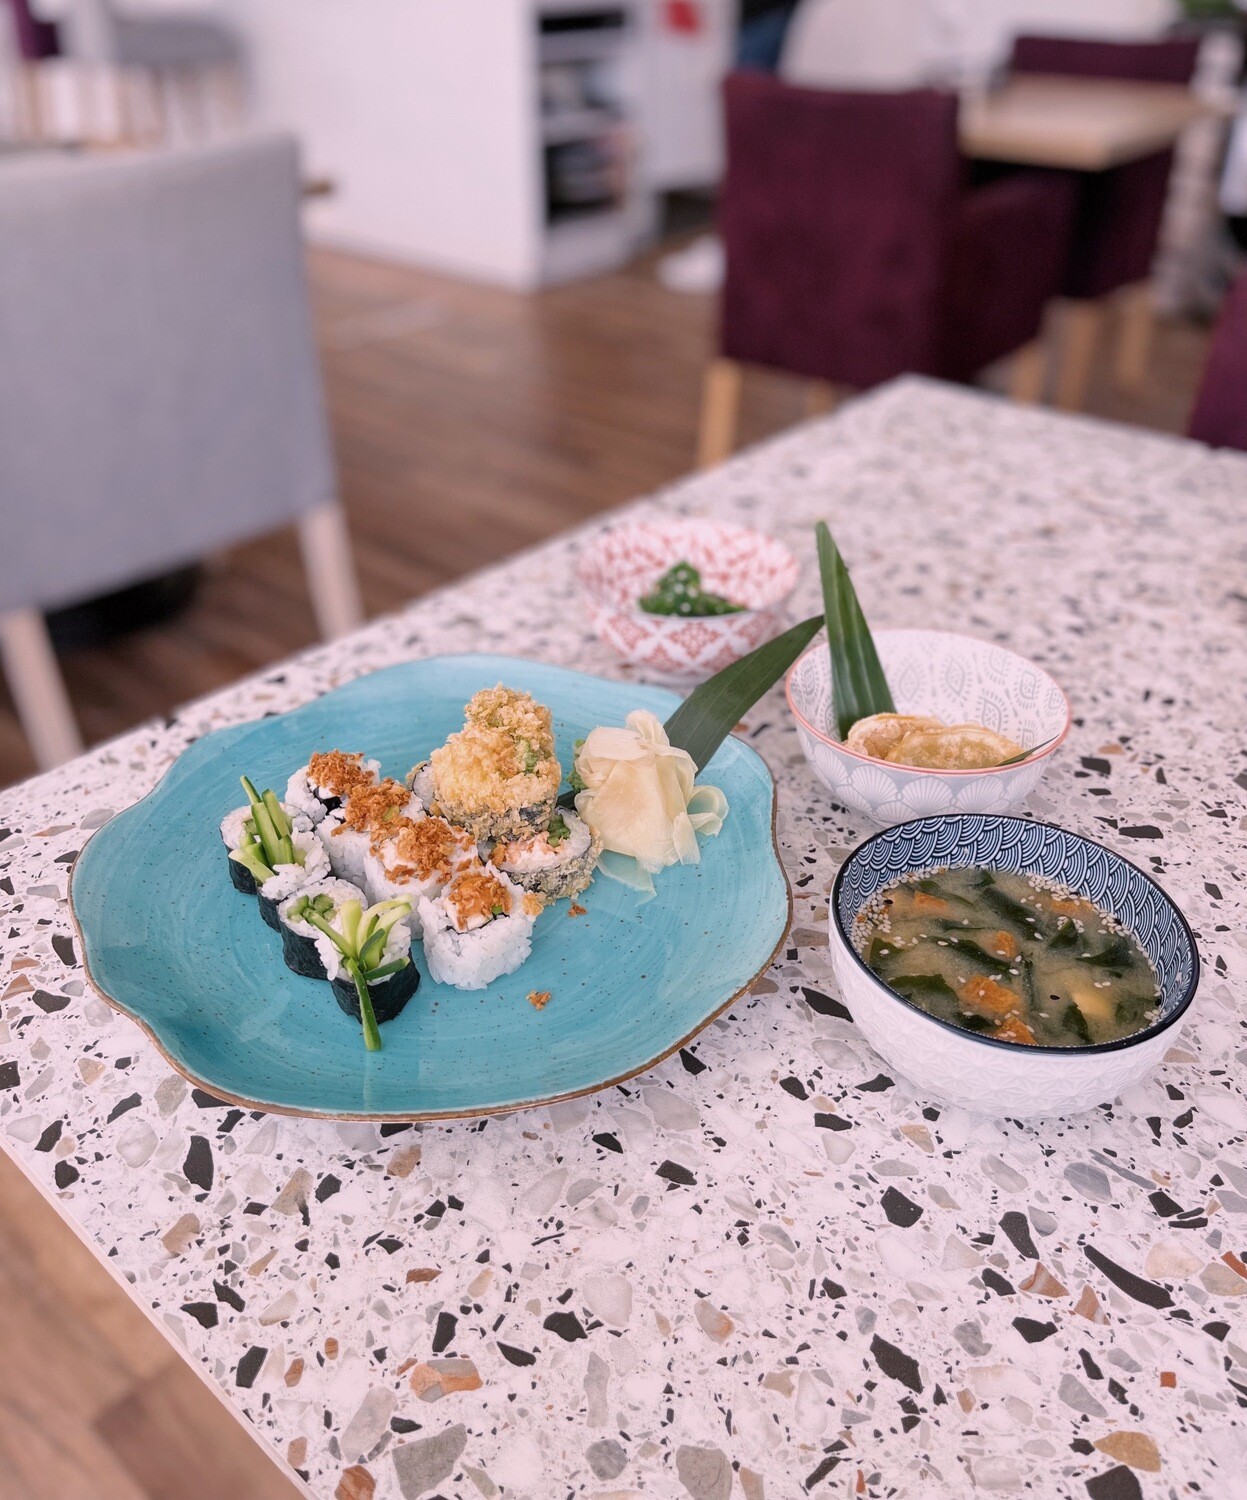 BESTSELLER LUNCH DUŻY 11 szt. sushi + zupa miso tofu + 2 szt. gyoza + sałatka